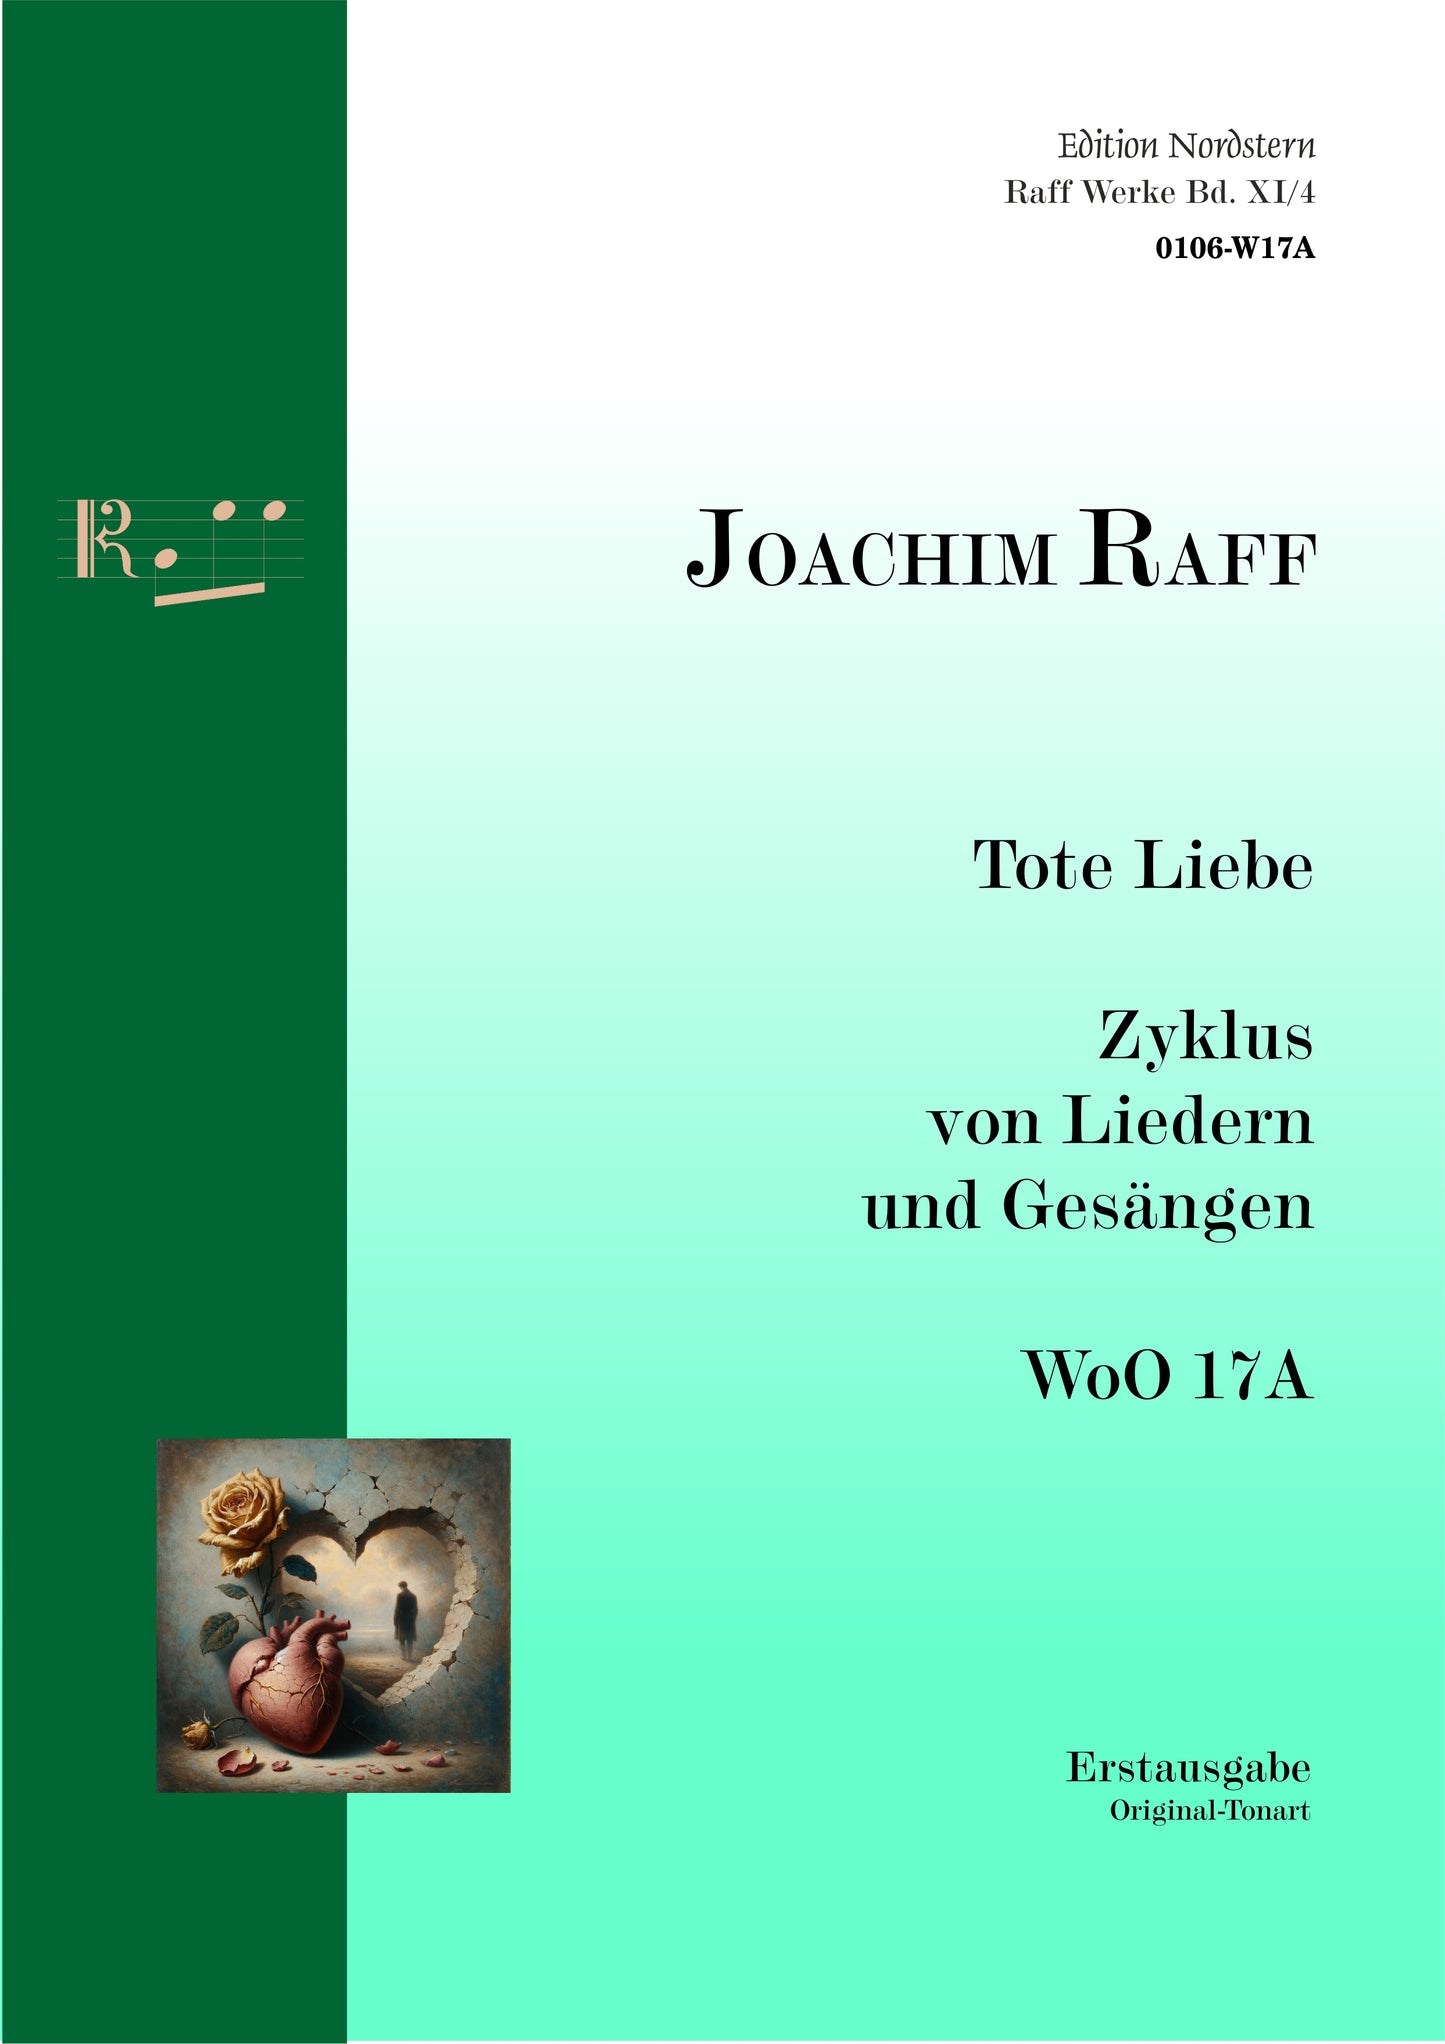 Joachim Raff, Tote Liebe, a cycle of songs, Nr. 2